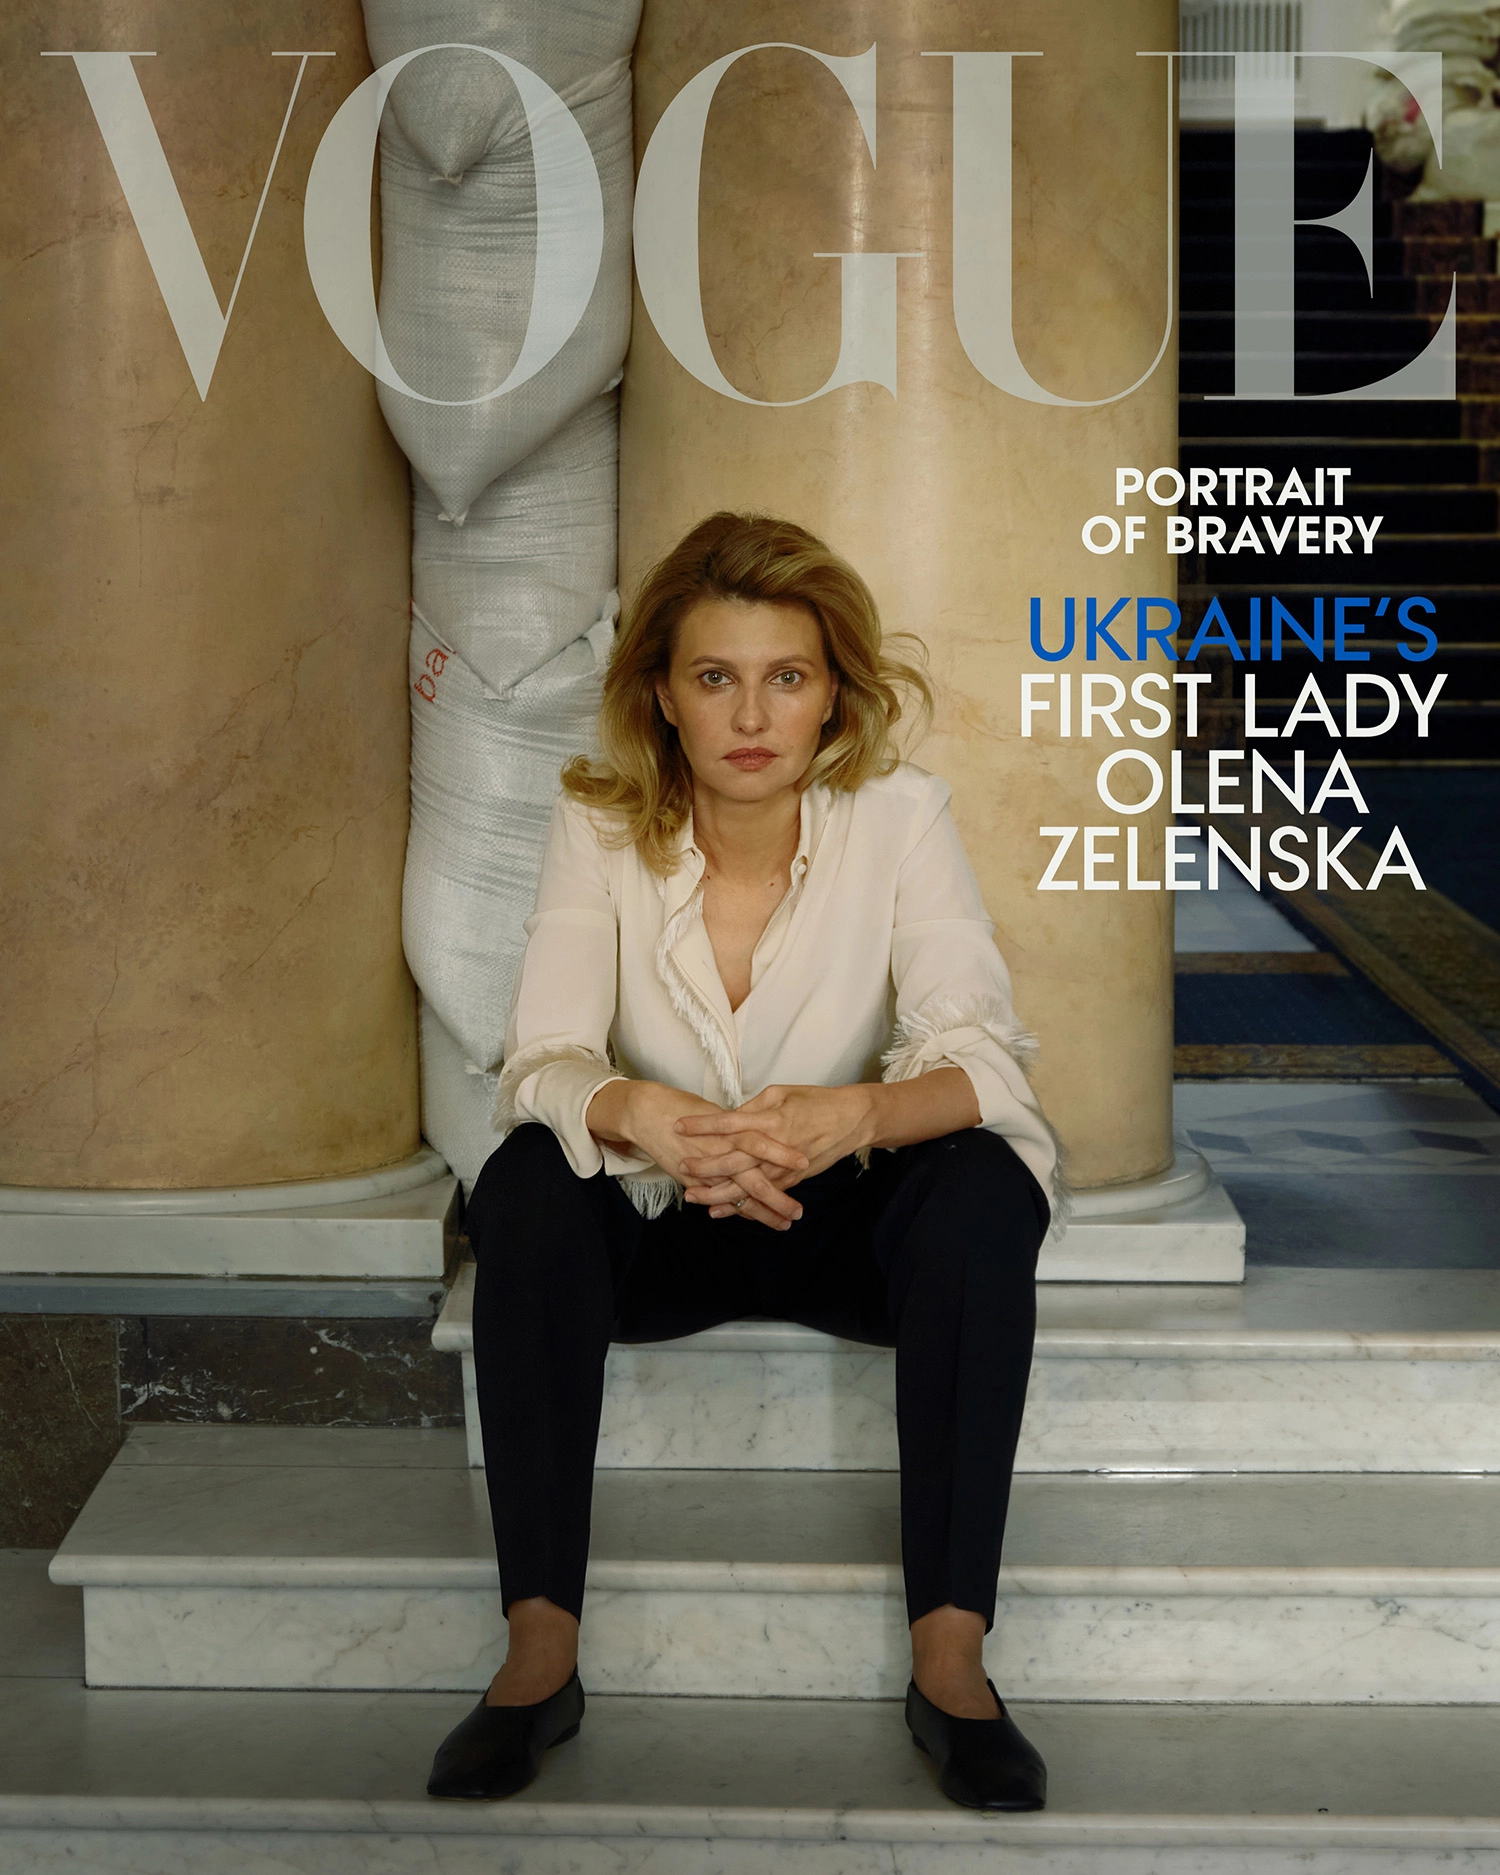 Ukraine’s First Lady Olena Zelenska covers Vogue US August 2022 Digital Edition by Annie Leibovitz